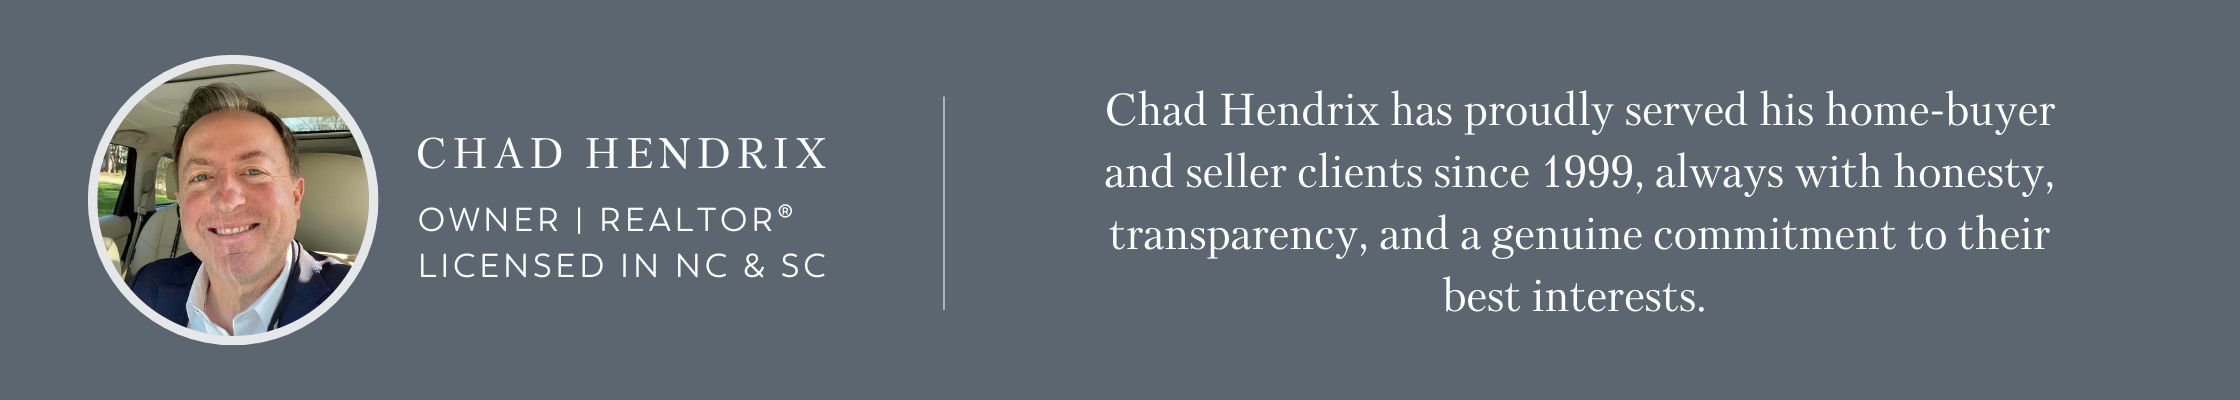 Chad Hendrix Real Estate Blog